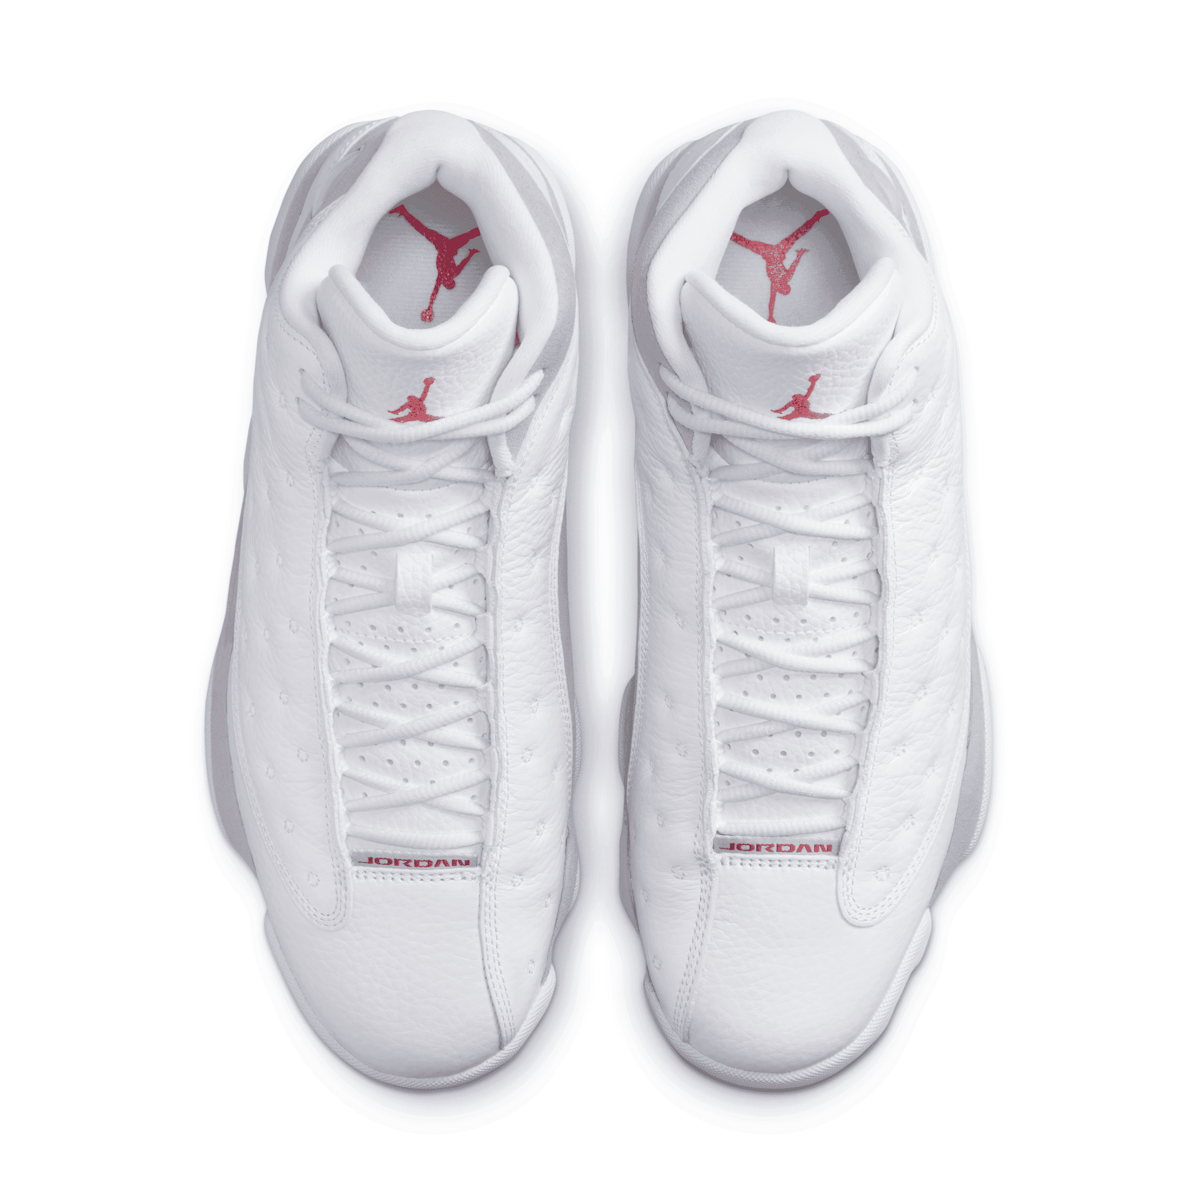 Lv Supreme Retro Red White Air Jordan 13 Shoes - Tagotee